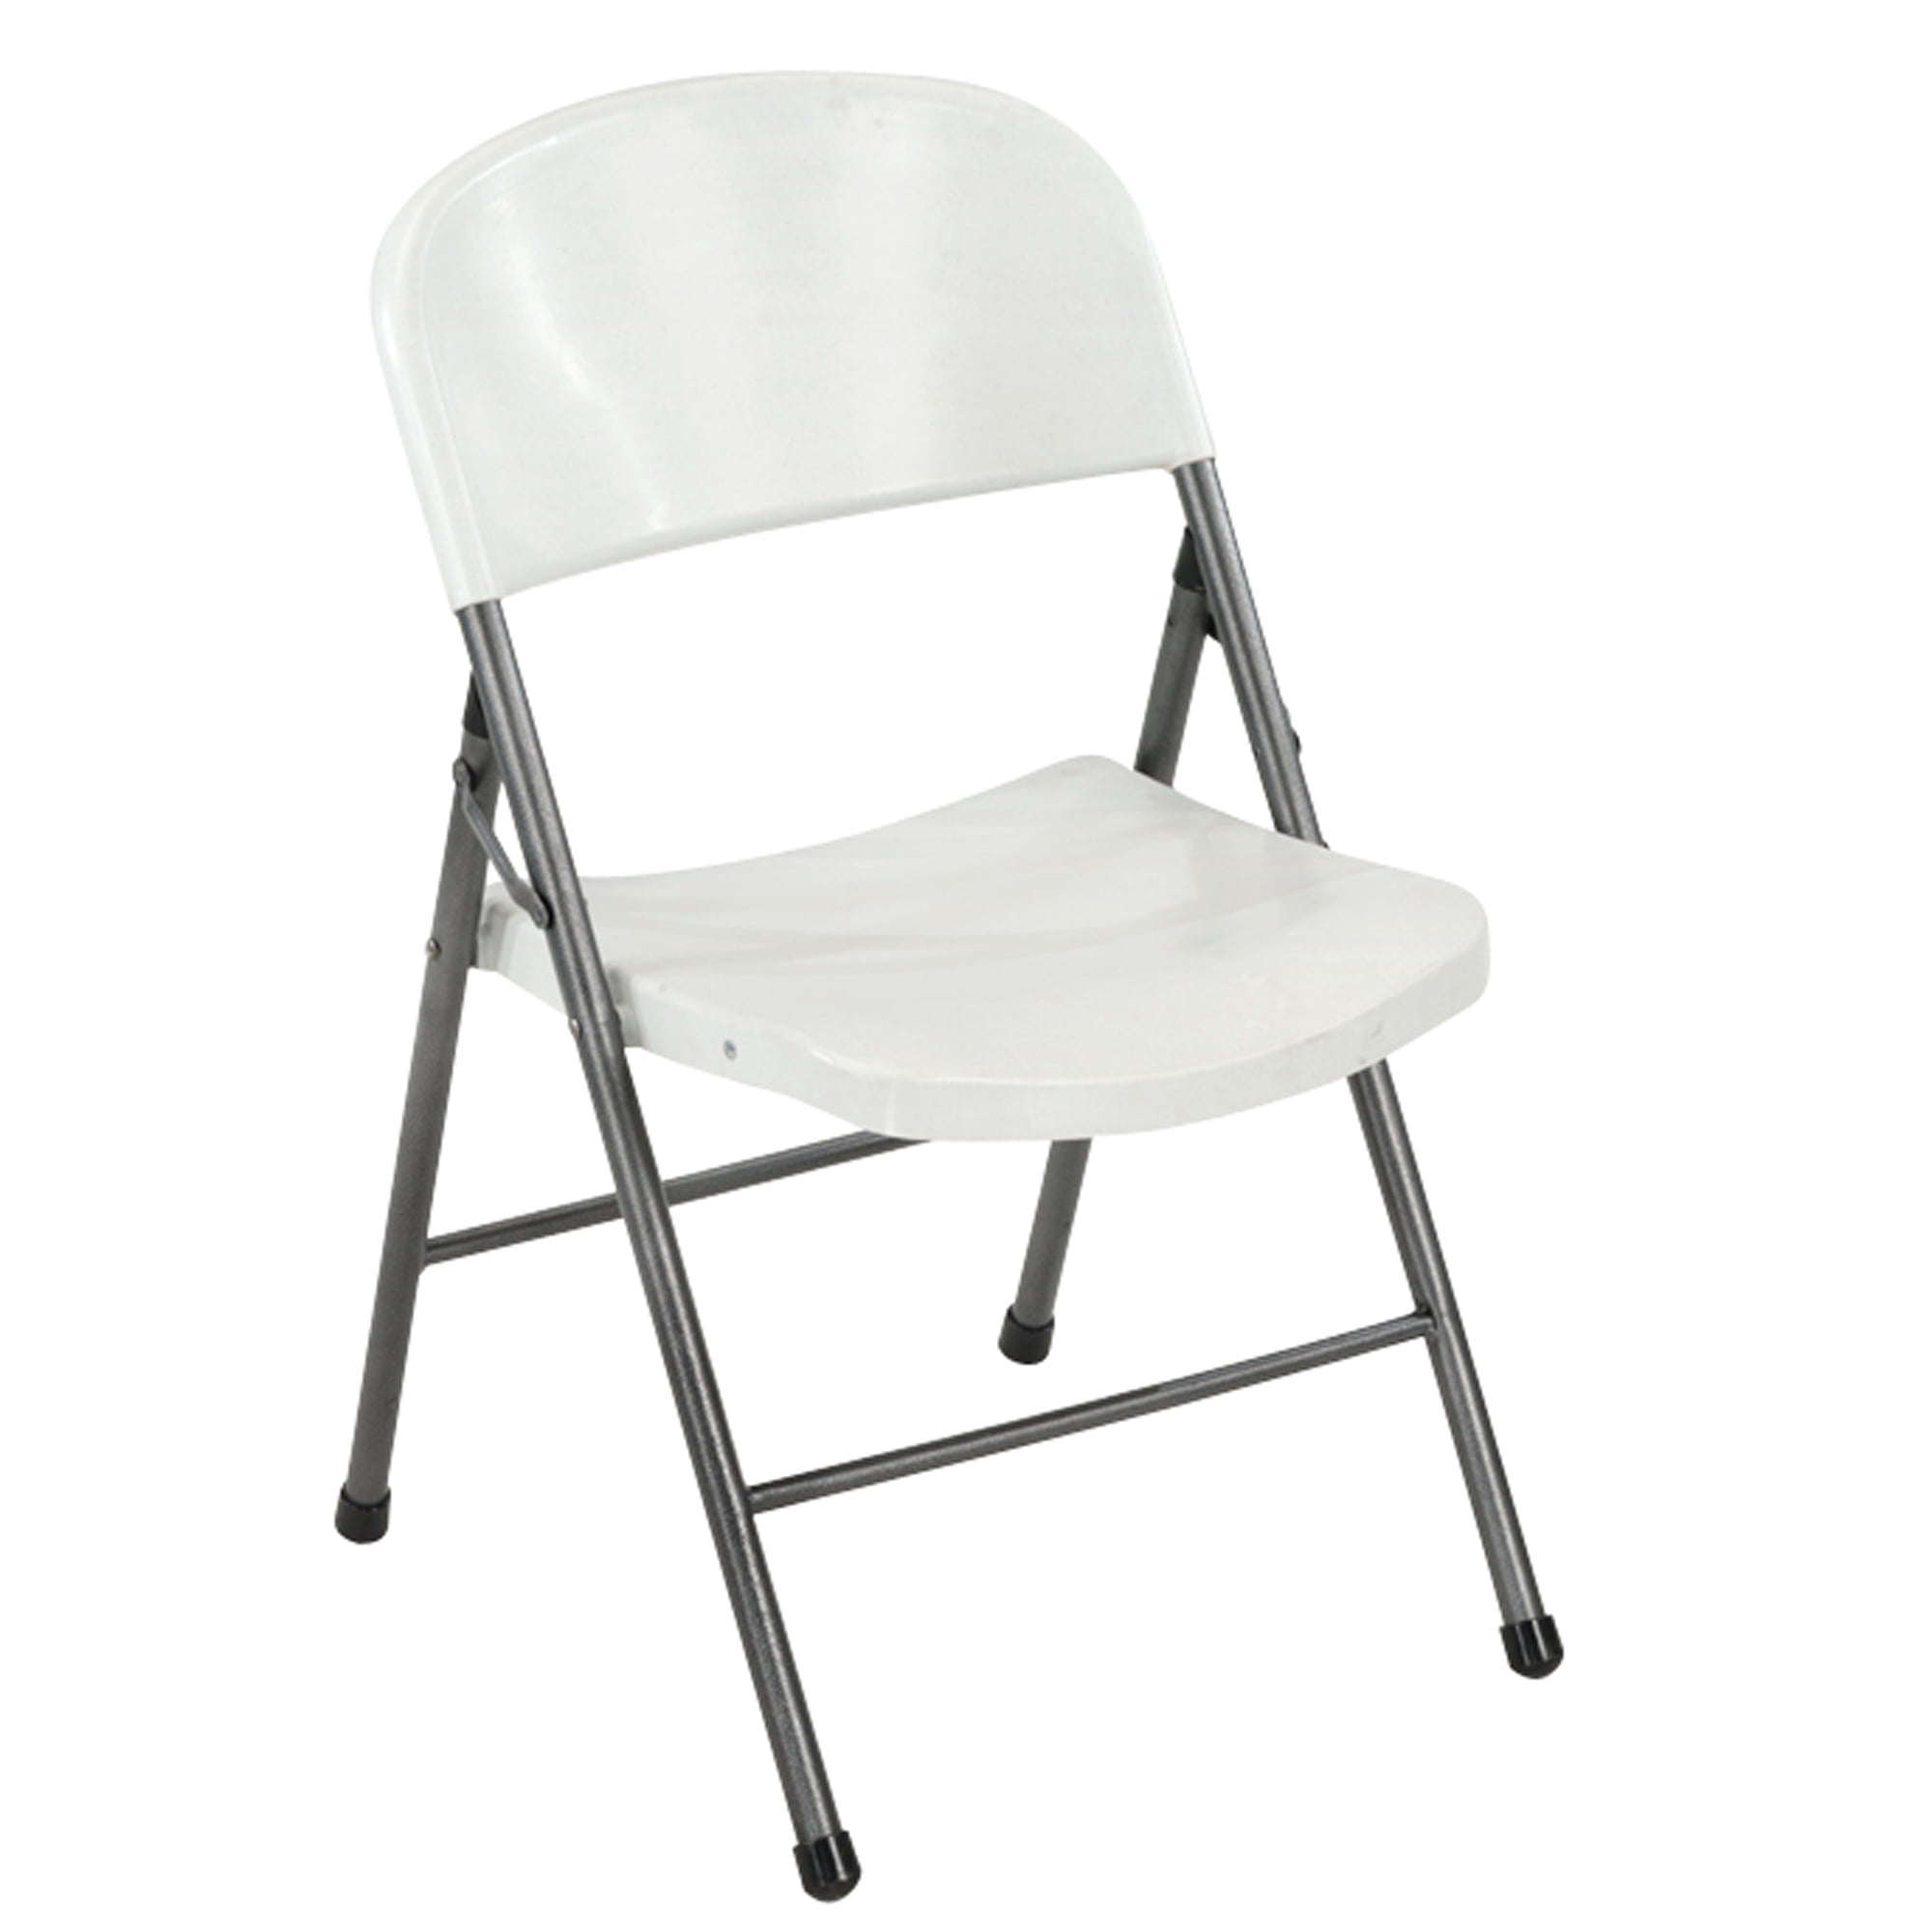 Mainstays Resin Chair, White - Walmart.com - Walmart.com